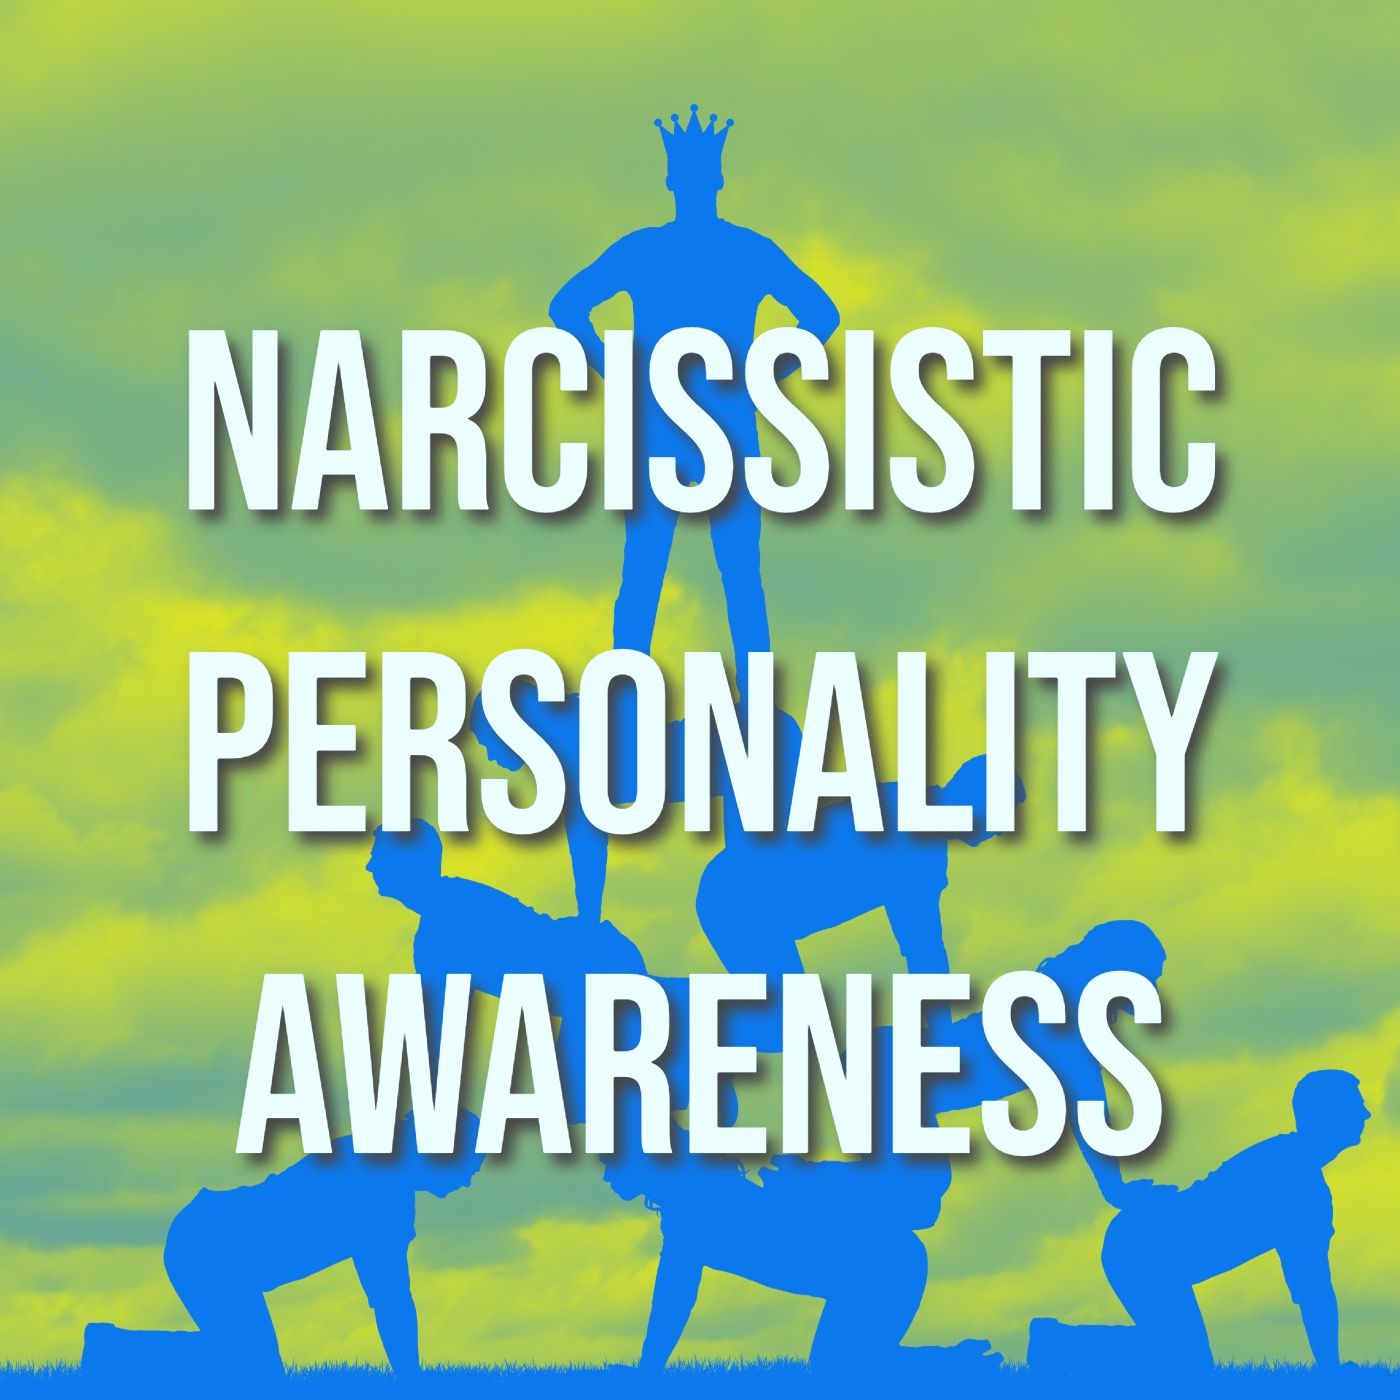 Narcissistic Personality Awareness (2018 rerun)